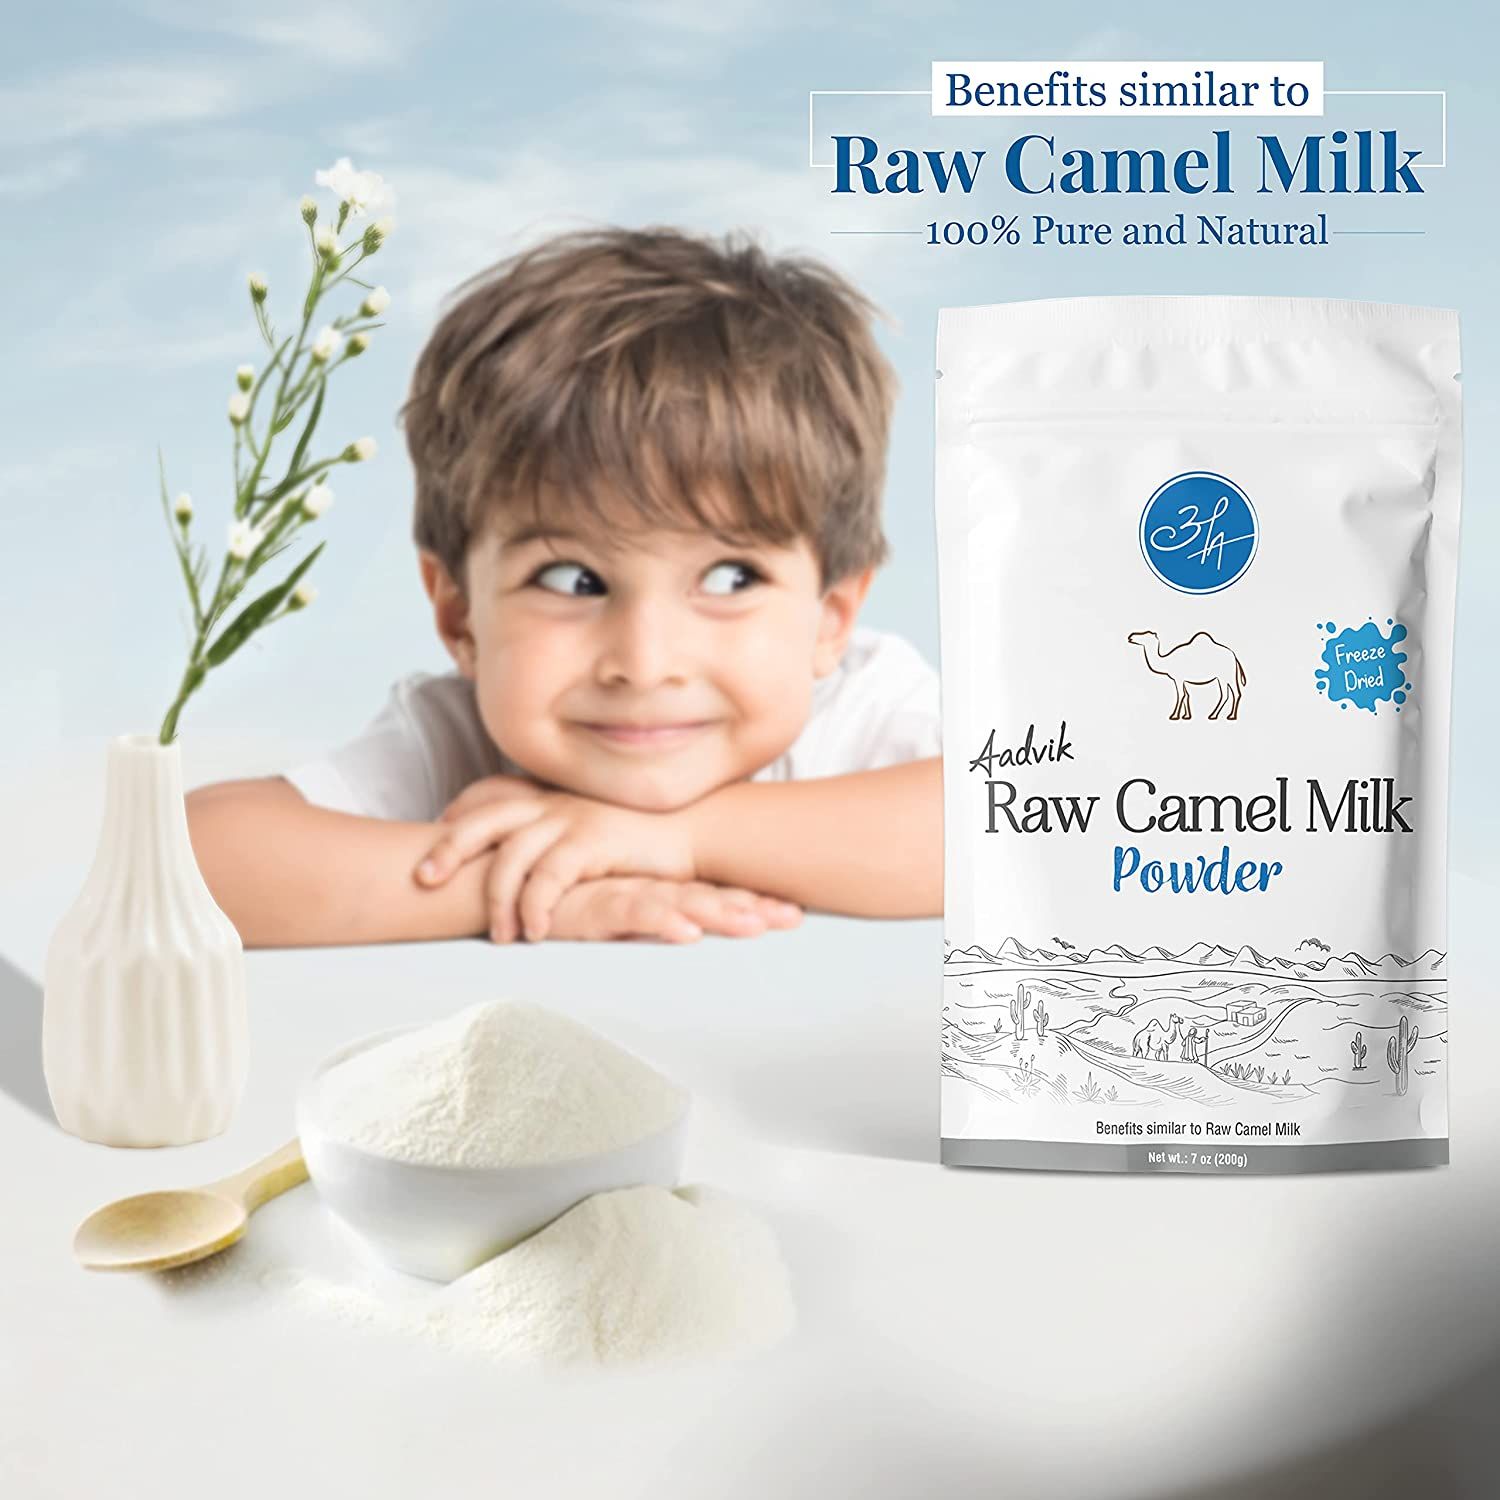 Aadvik Raw Camel Milk Powder Image